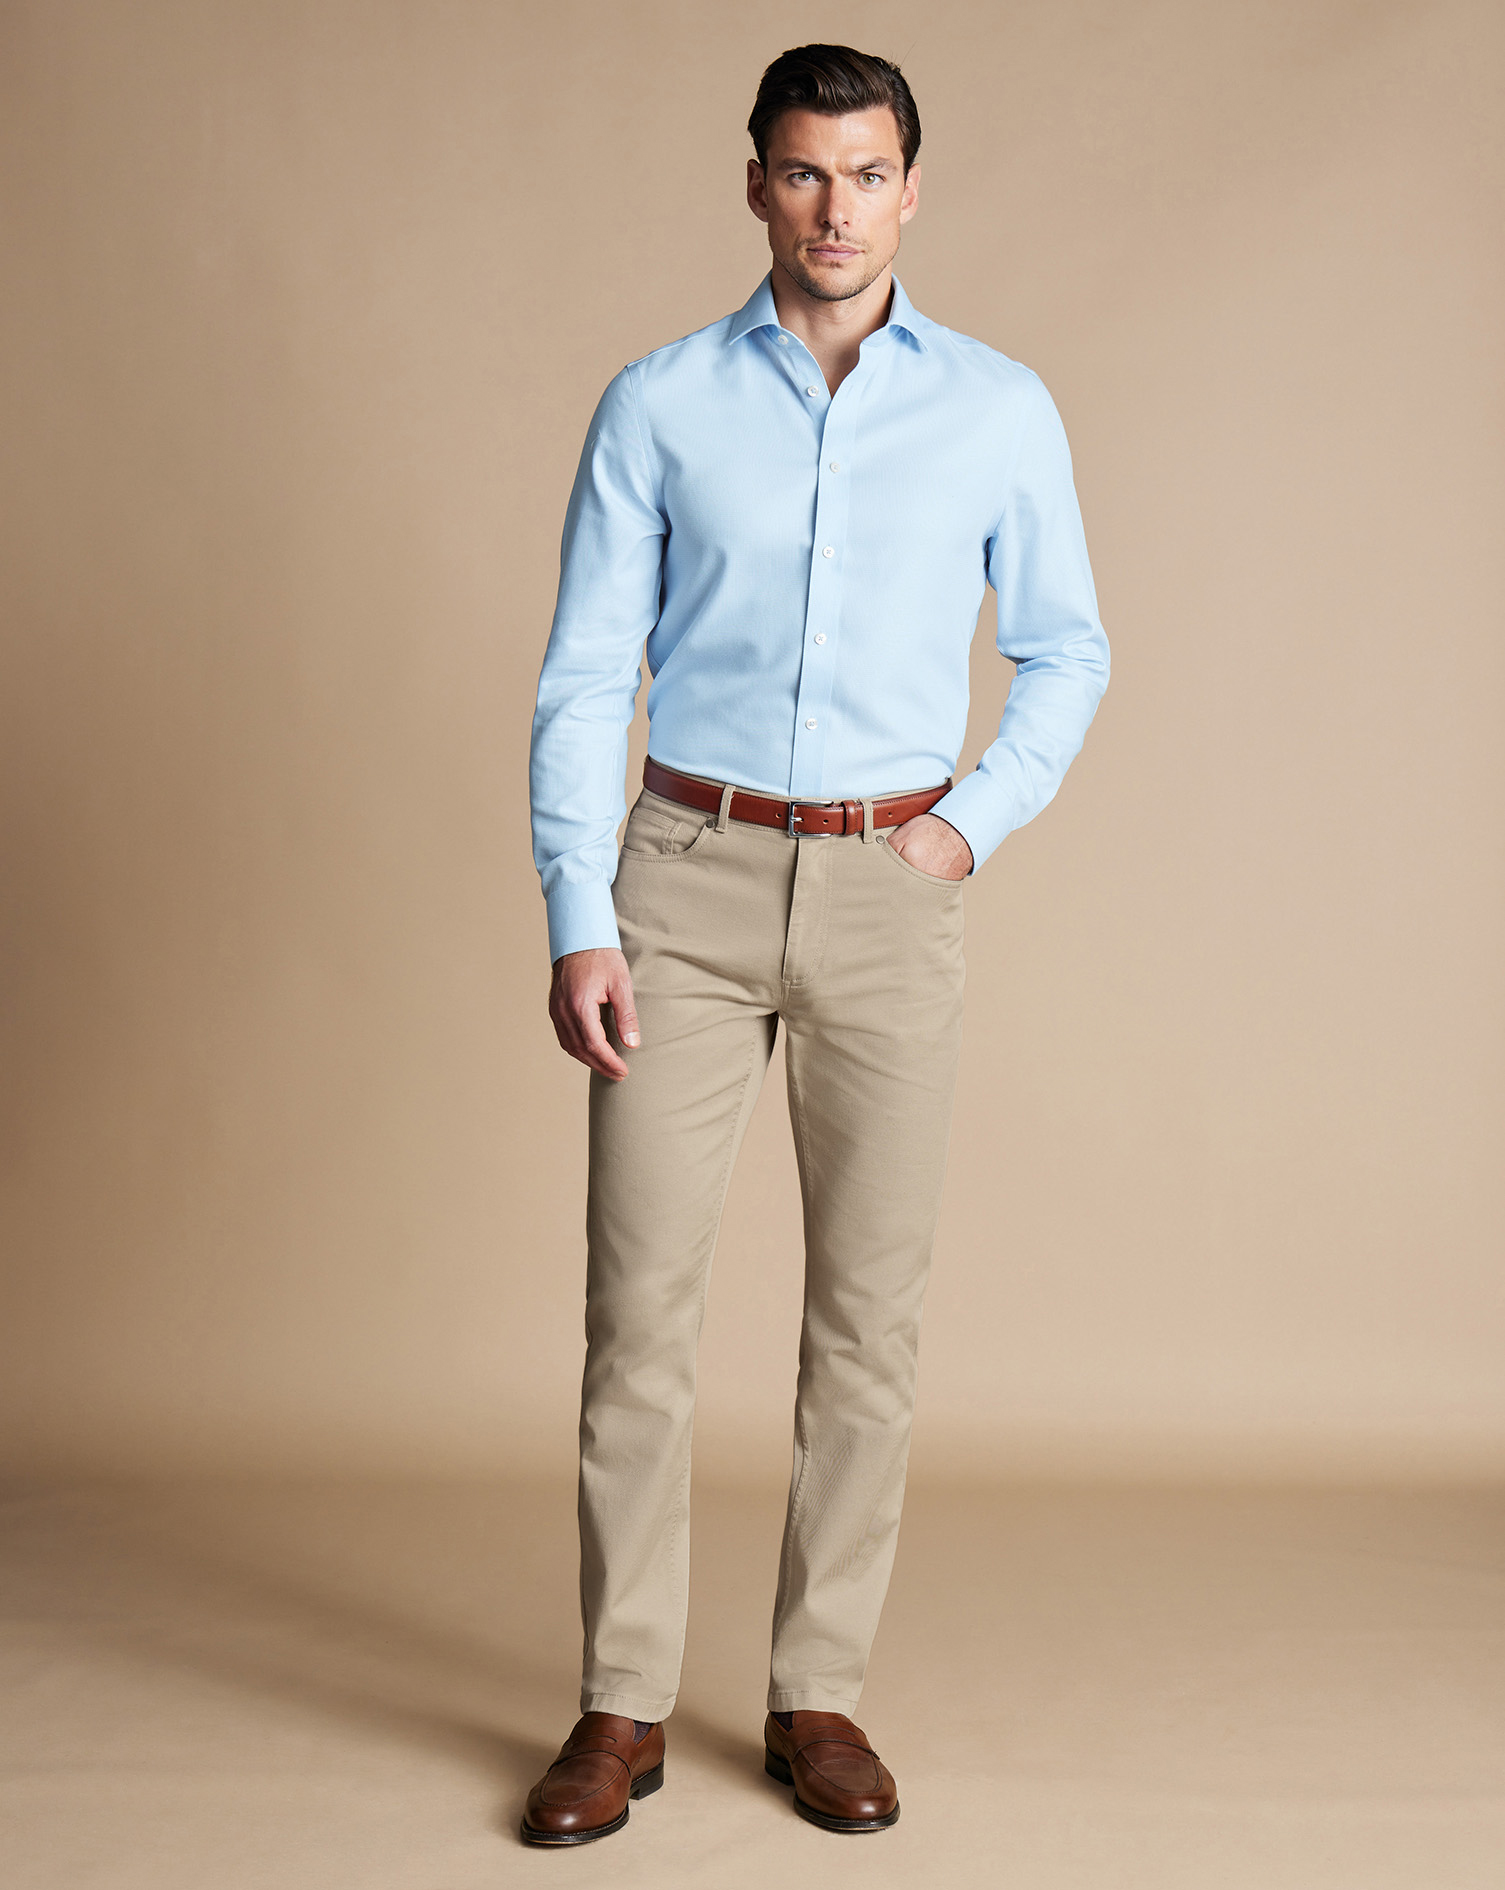 Men's Charles Tyrwhitt Twill 5 Pocket Jeans - Stone Neutral Size W36 L30 Cotton
